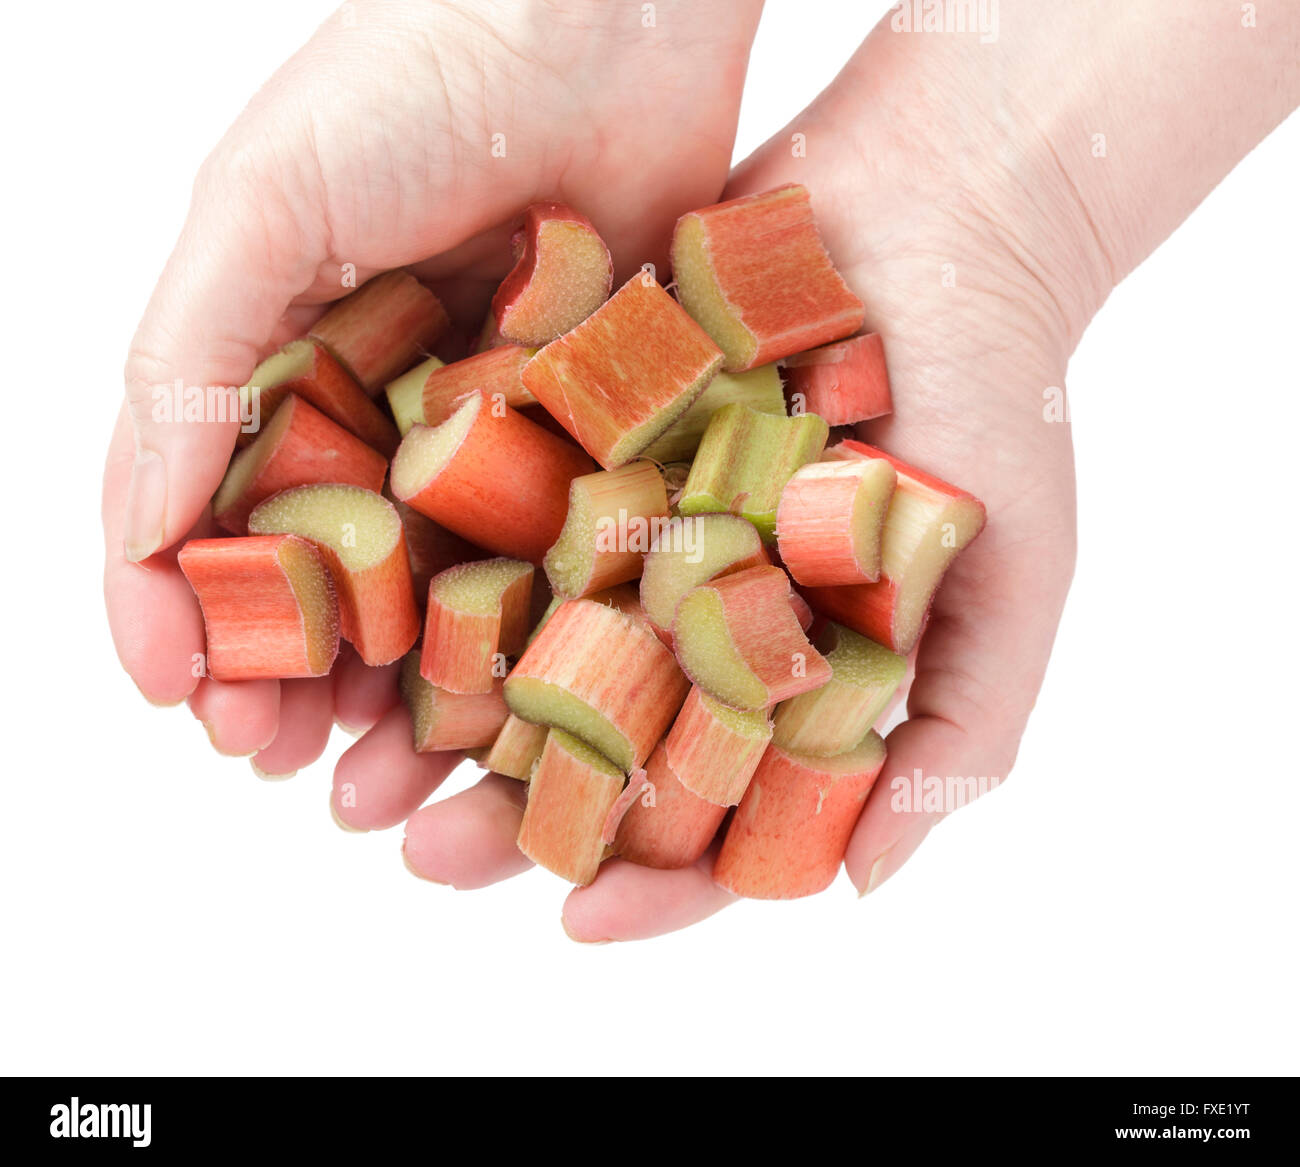 hands holding rhubarb Stock Photo